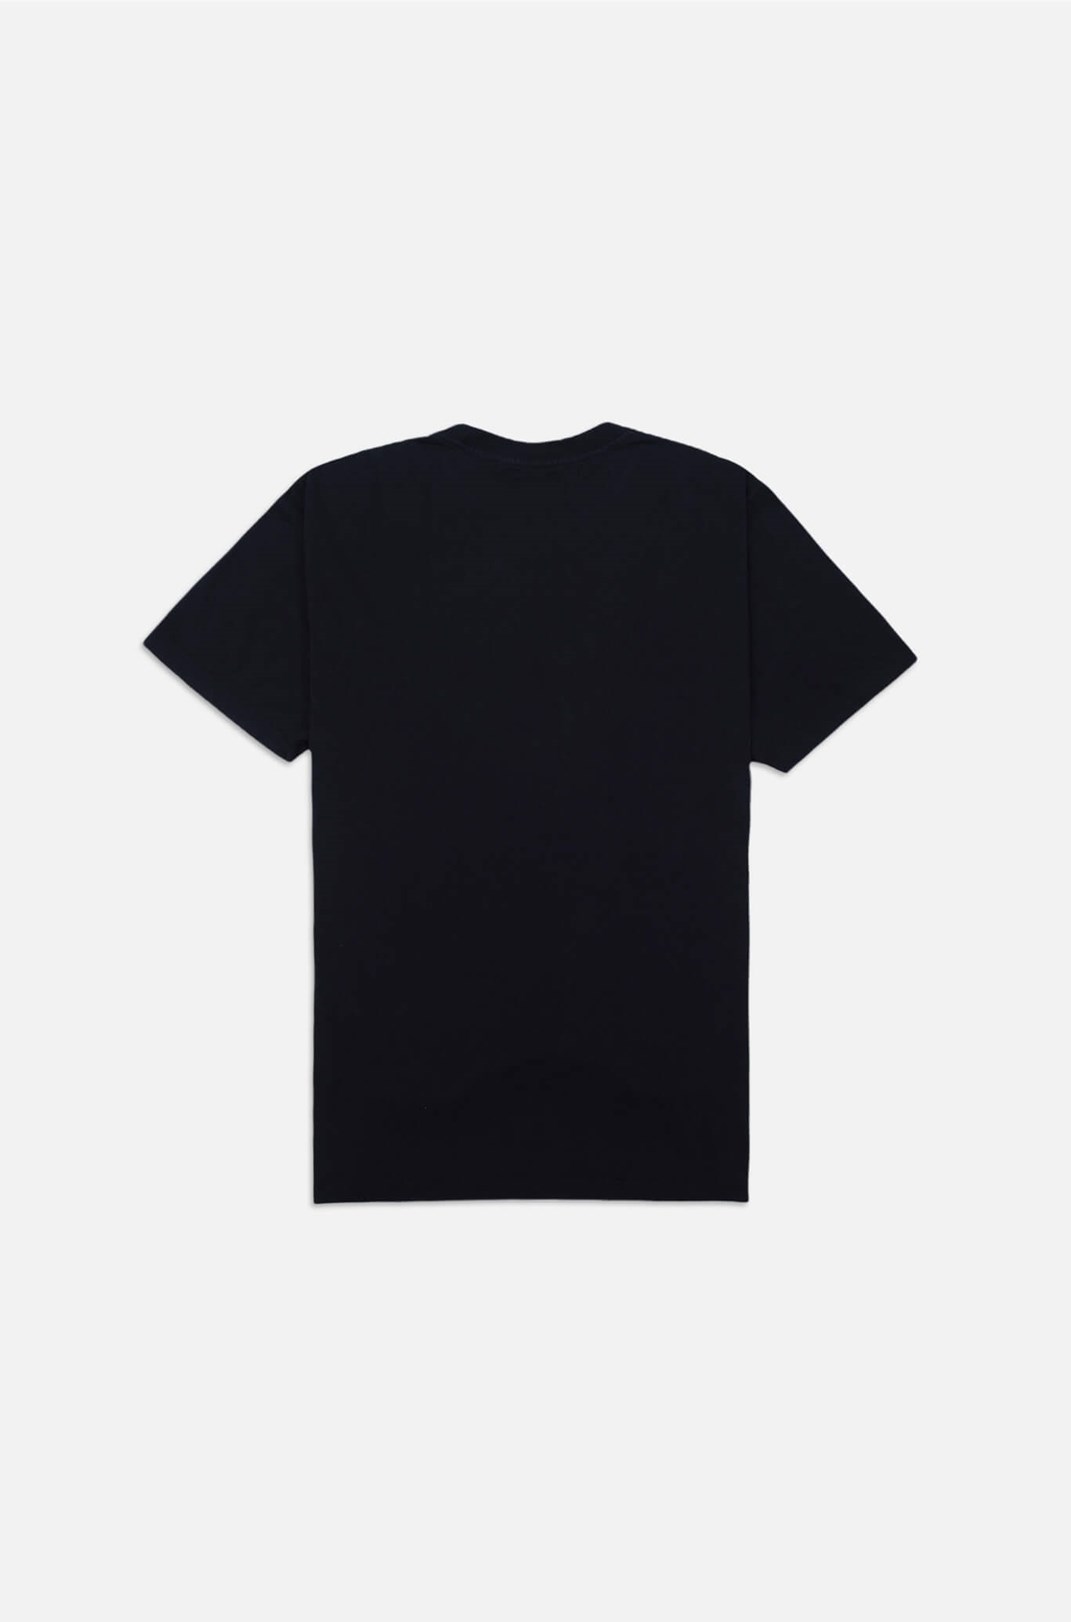 Camiseta Bold Approve Black Car Preta